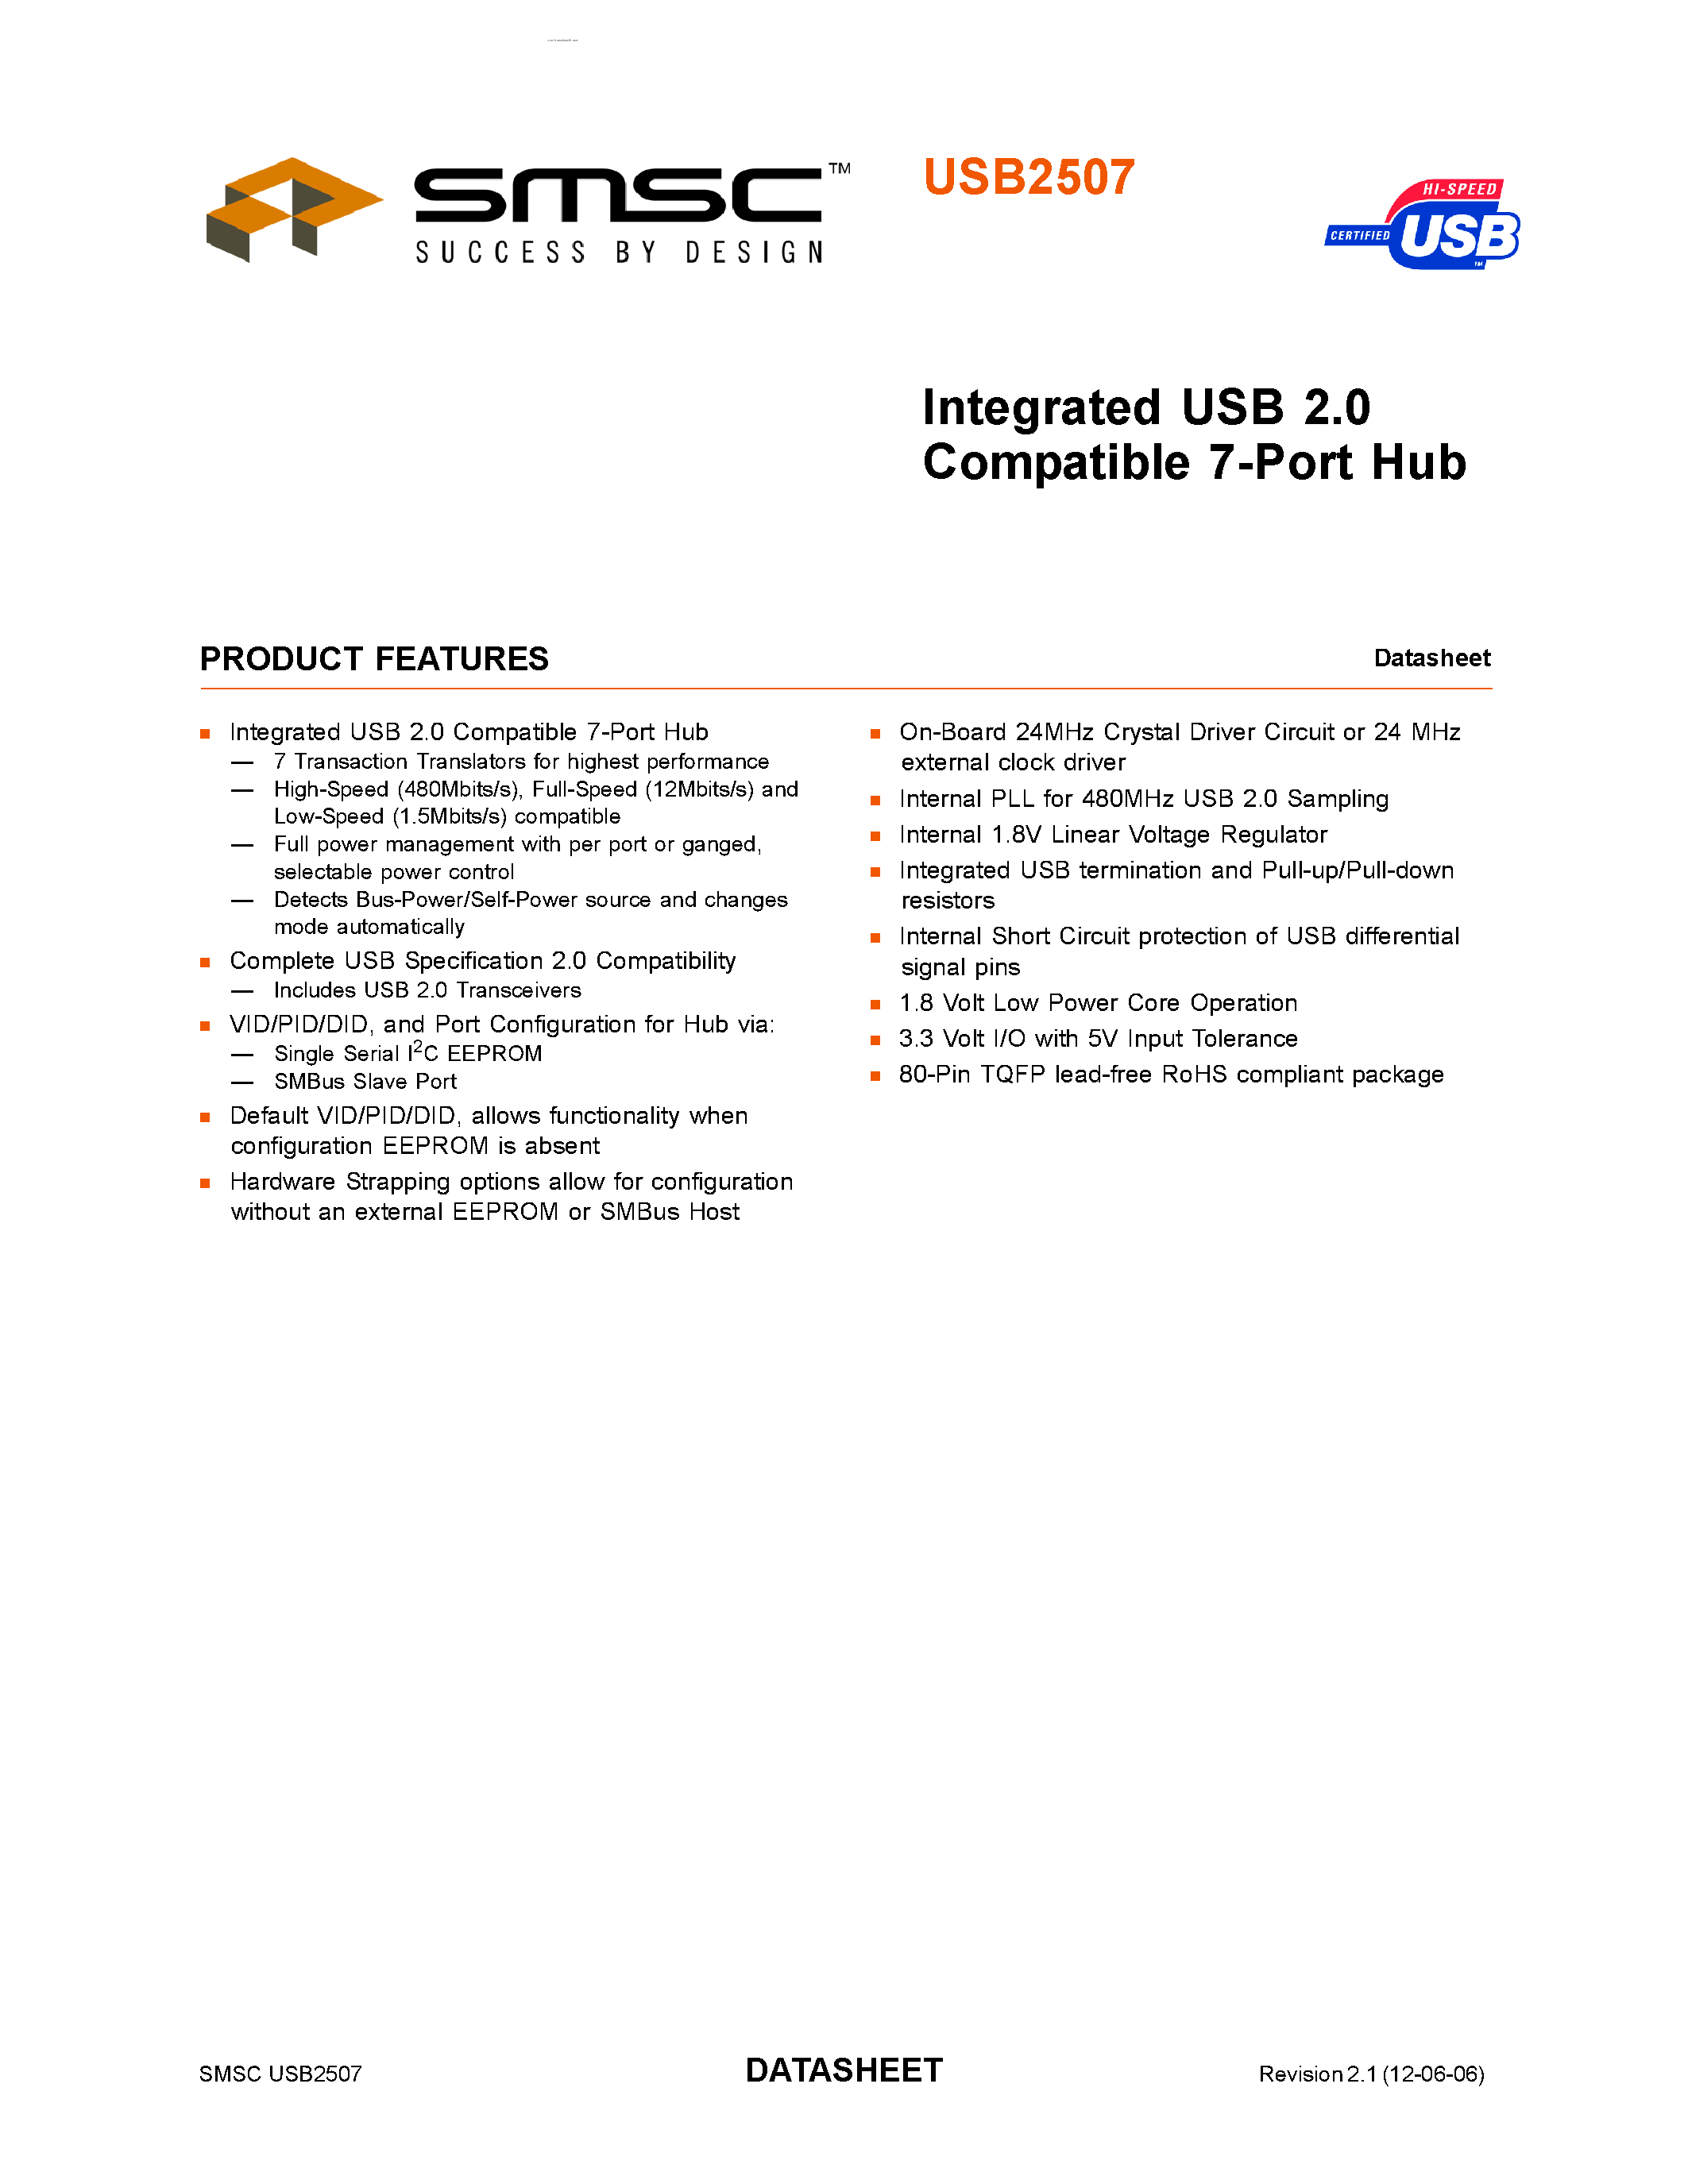 Datasheet USB2507 - Integrated USB 2.0 Compatible 7-Port Hub page 1